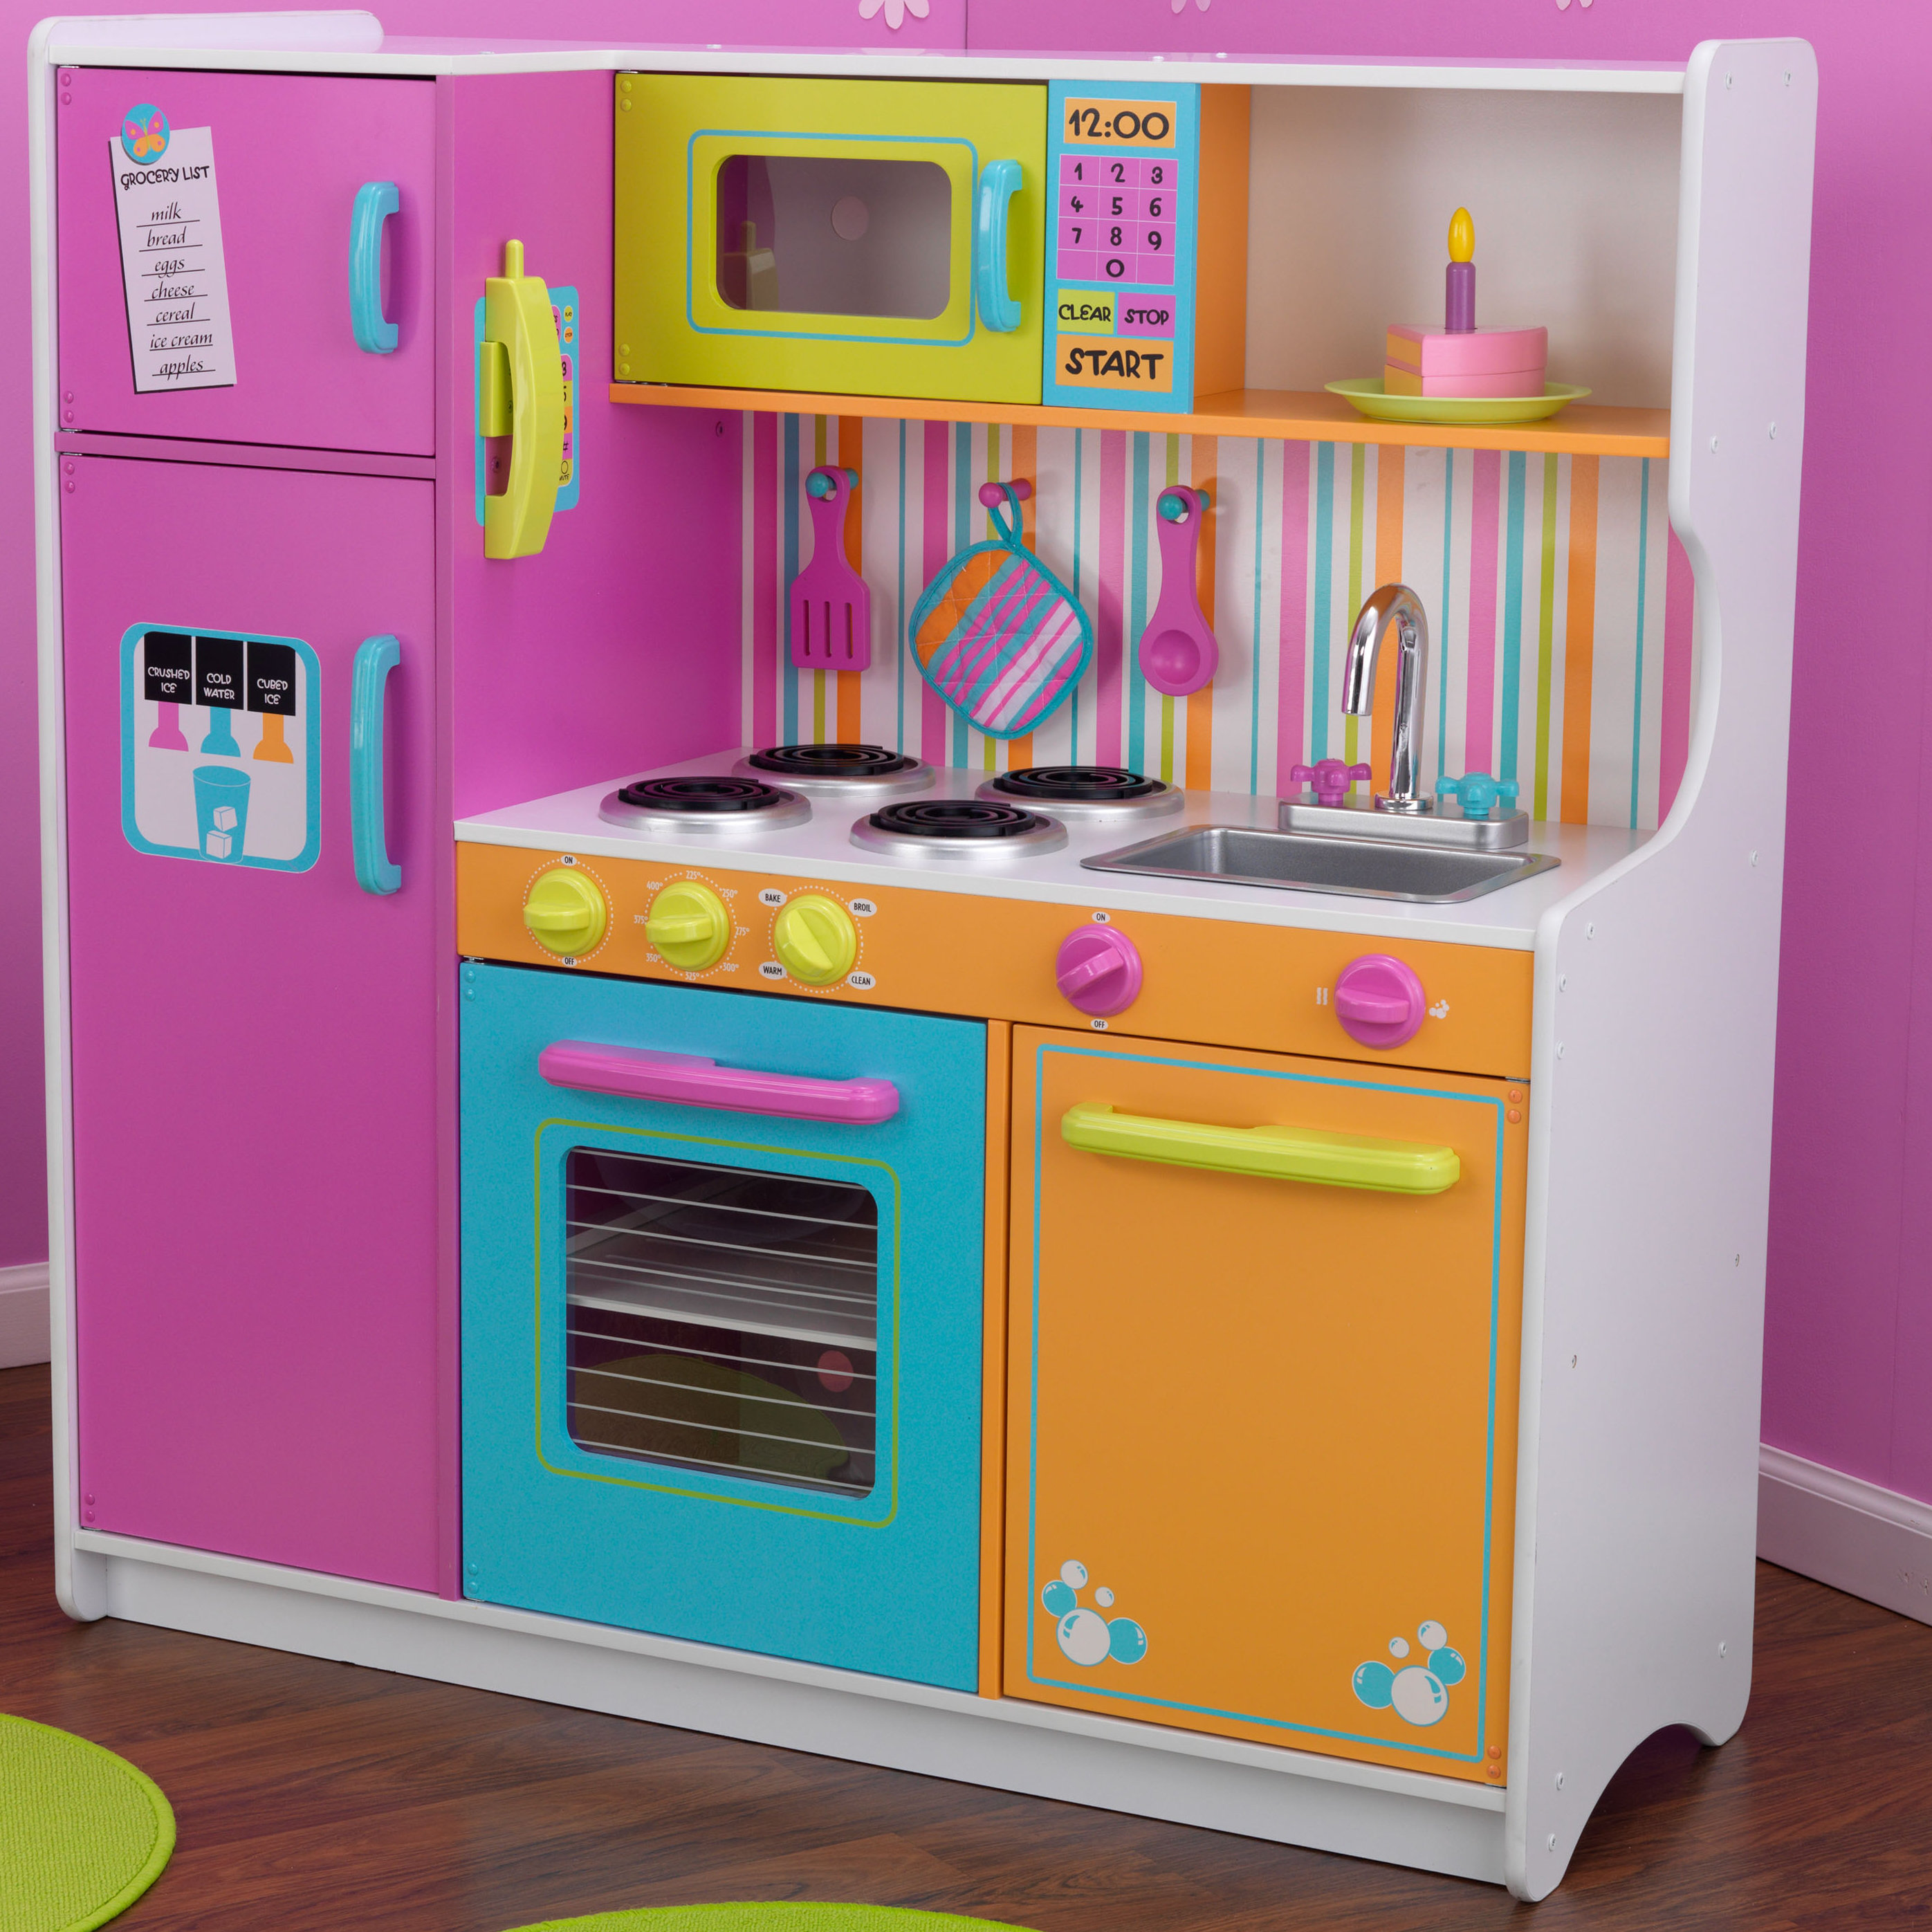 kidkraft kitchen sets